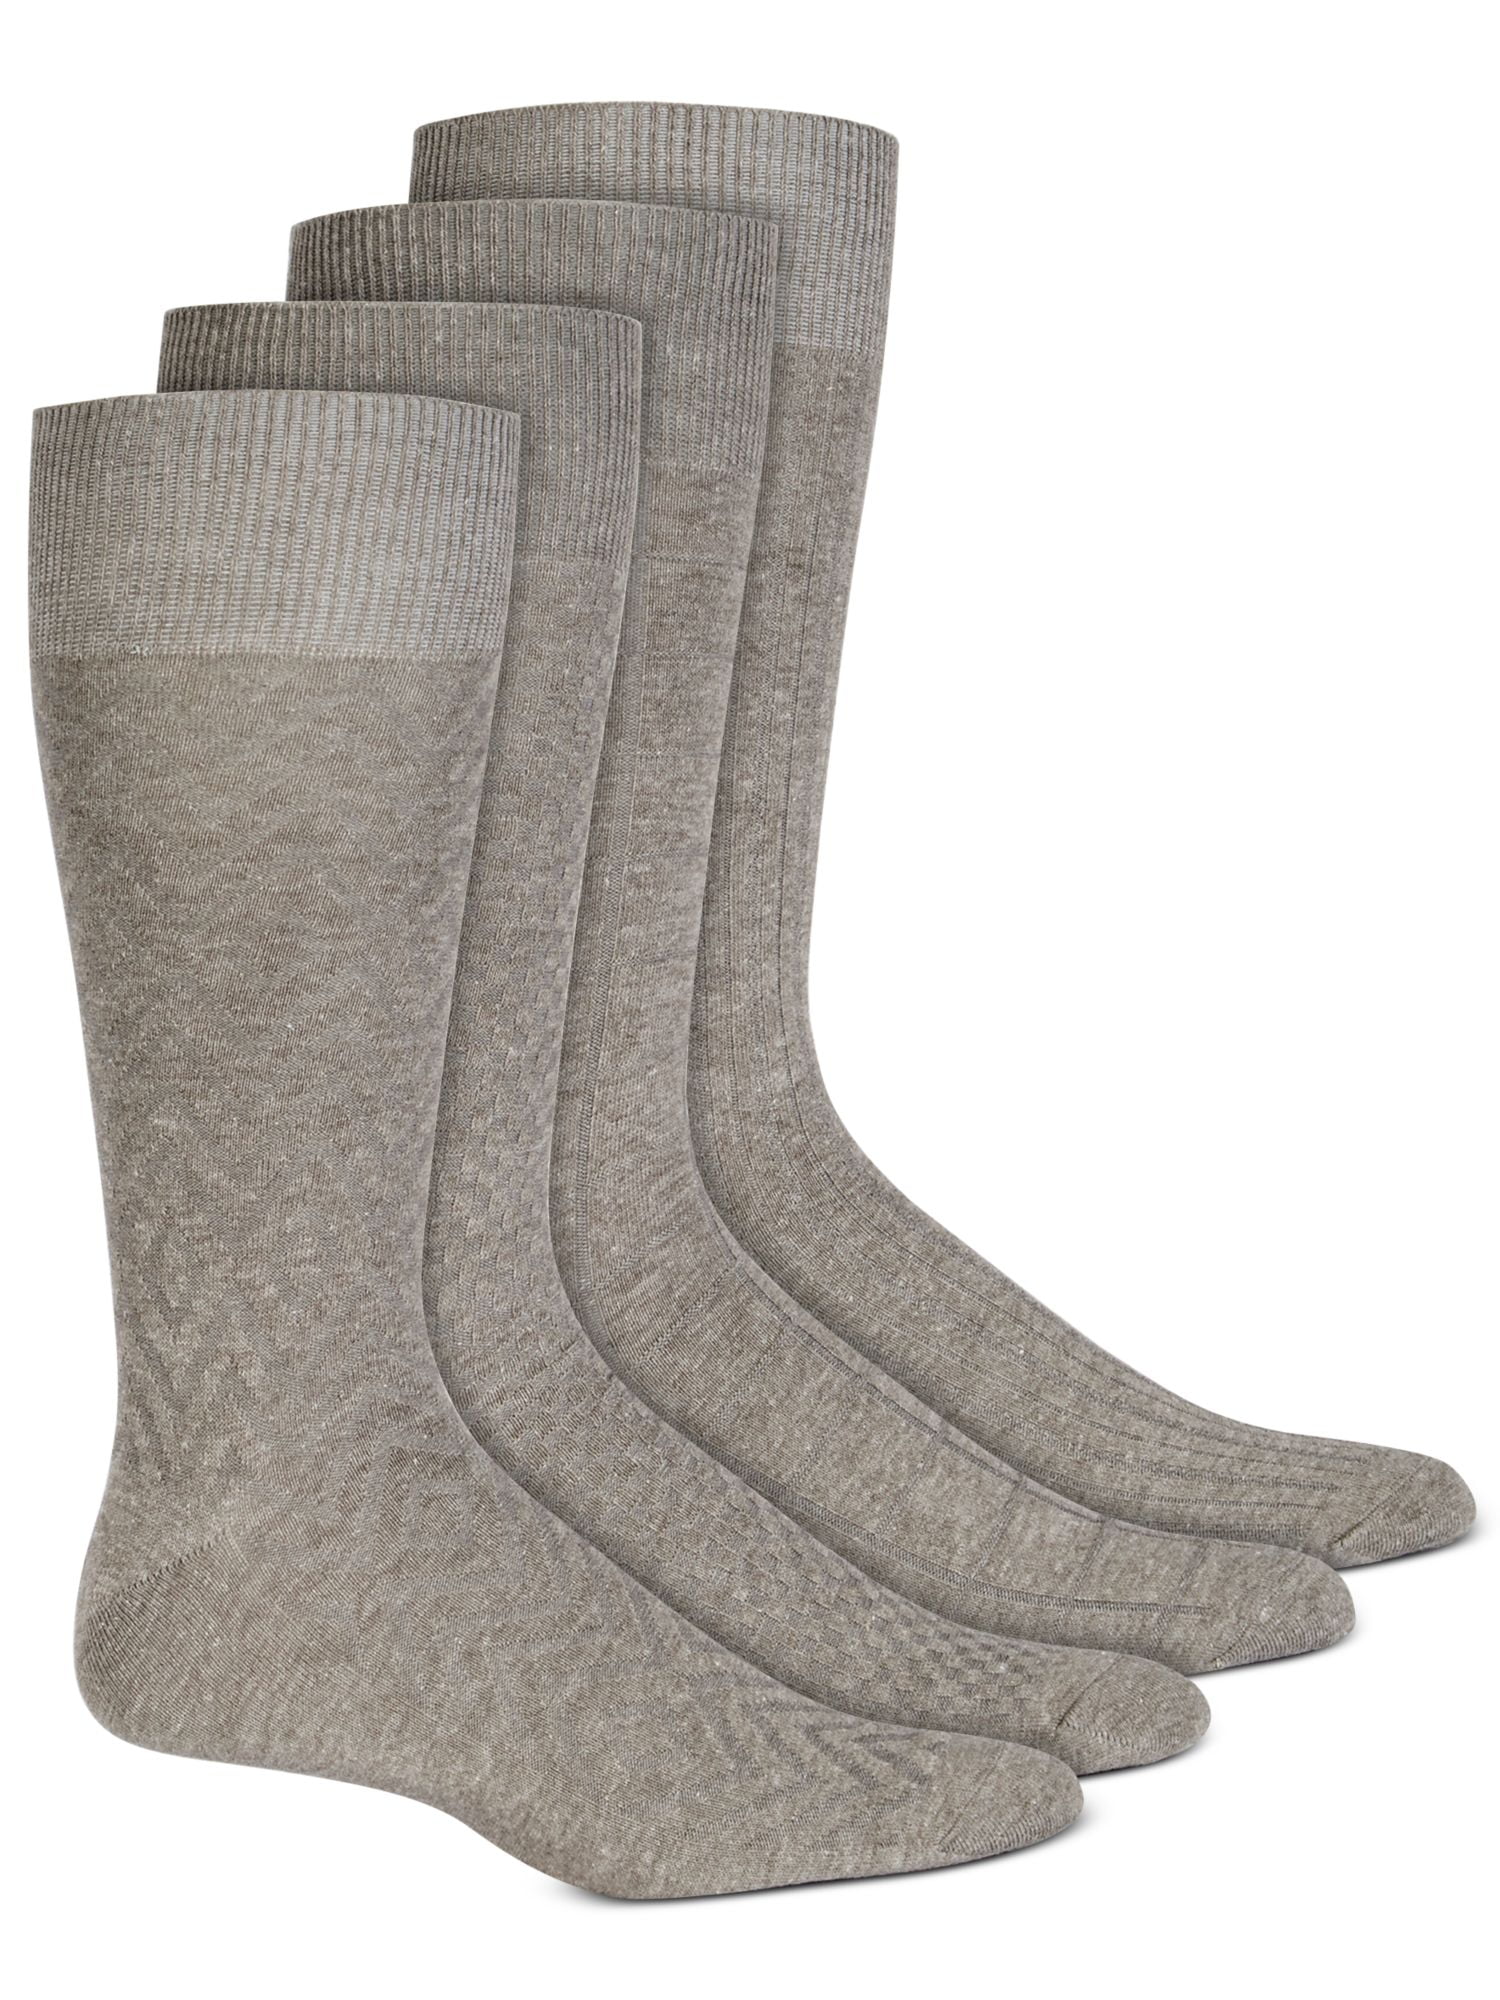 ALFANI Mens 4 Pack Gray Textured Dress Crew Socks 7-12 - Walmart.com